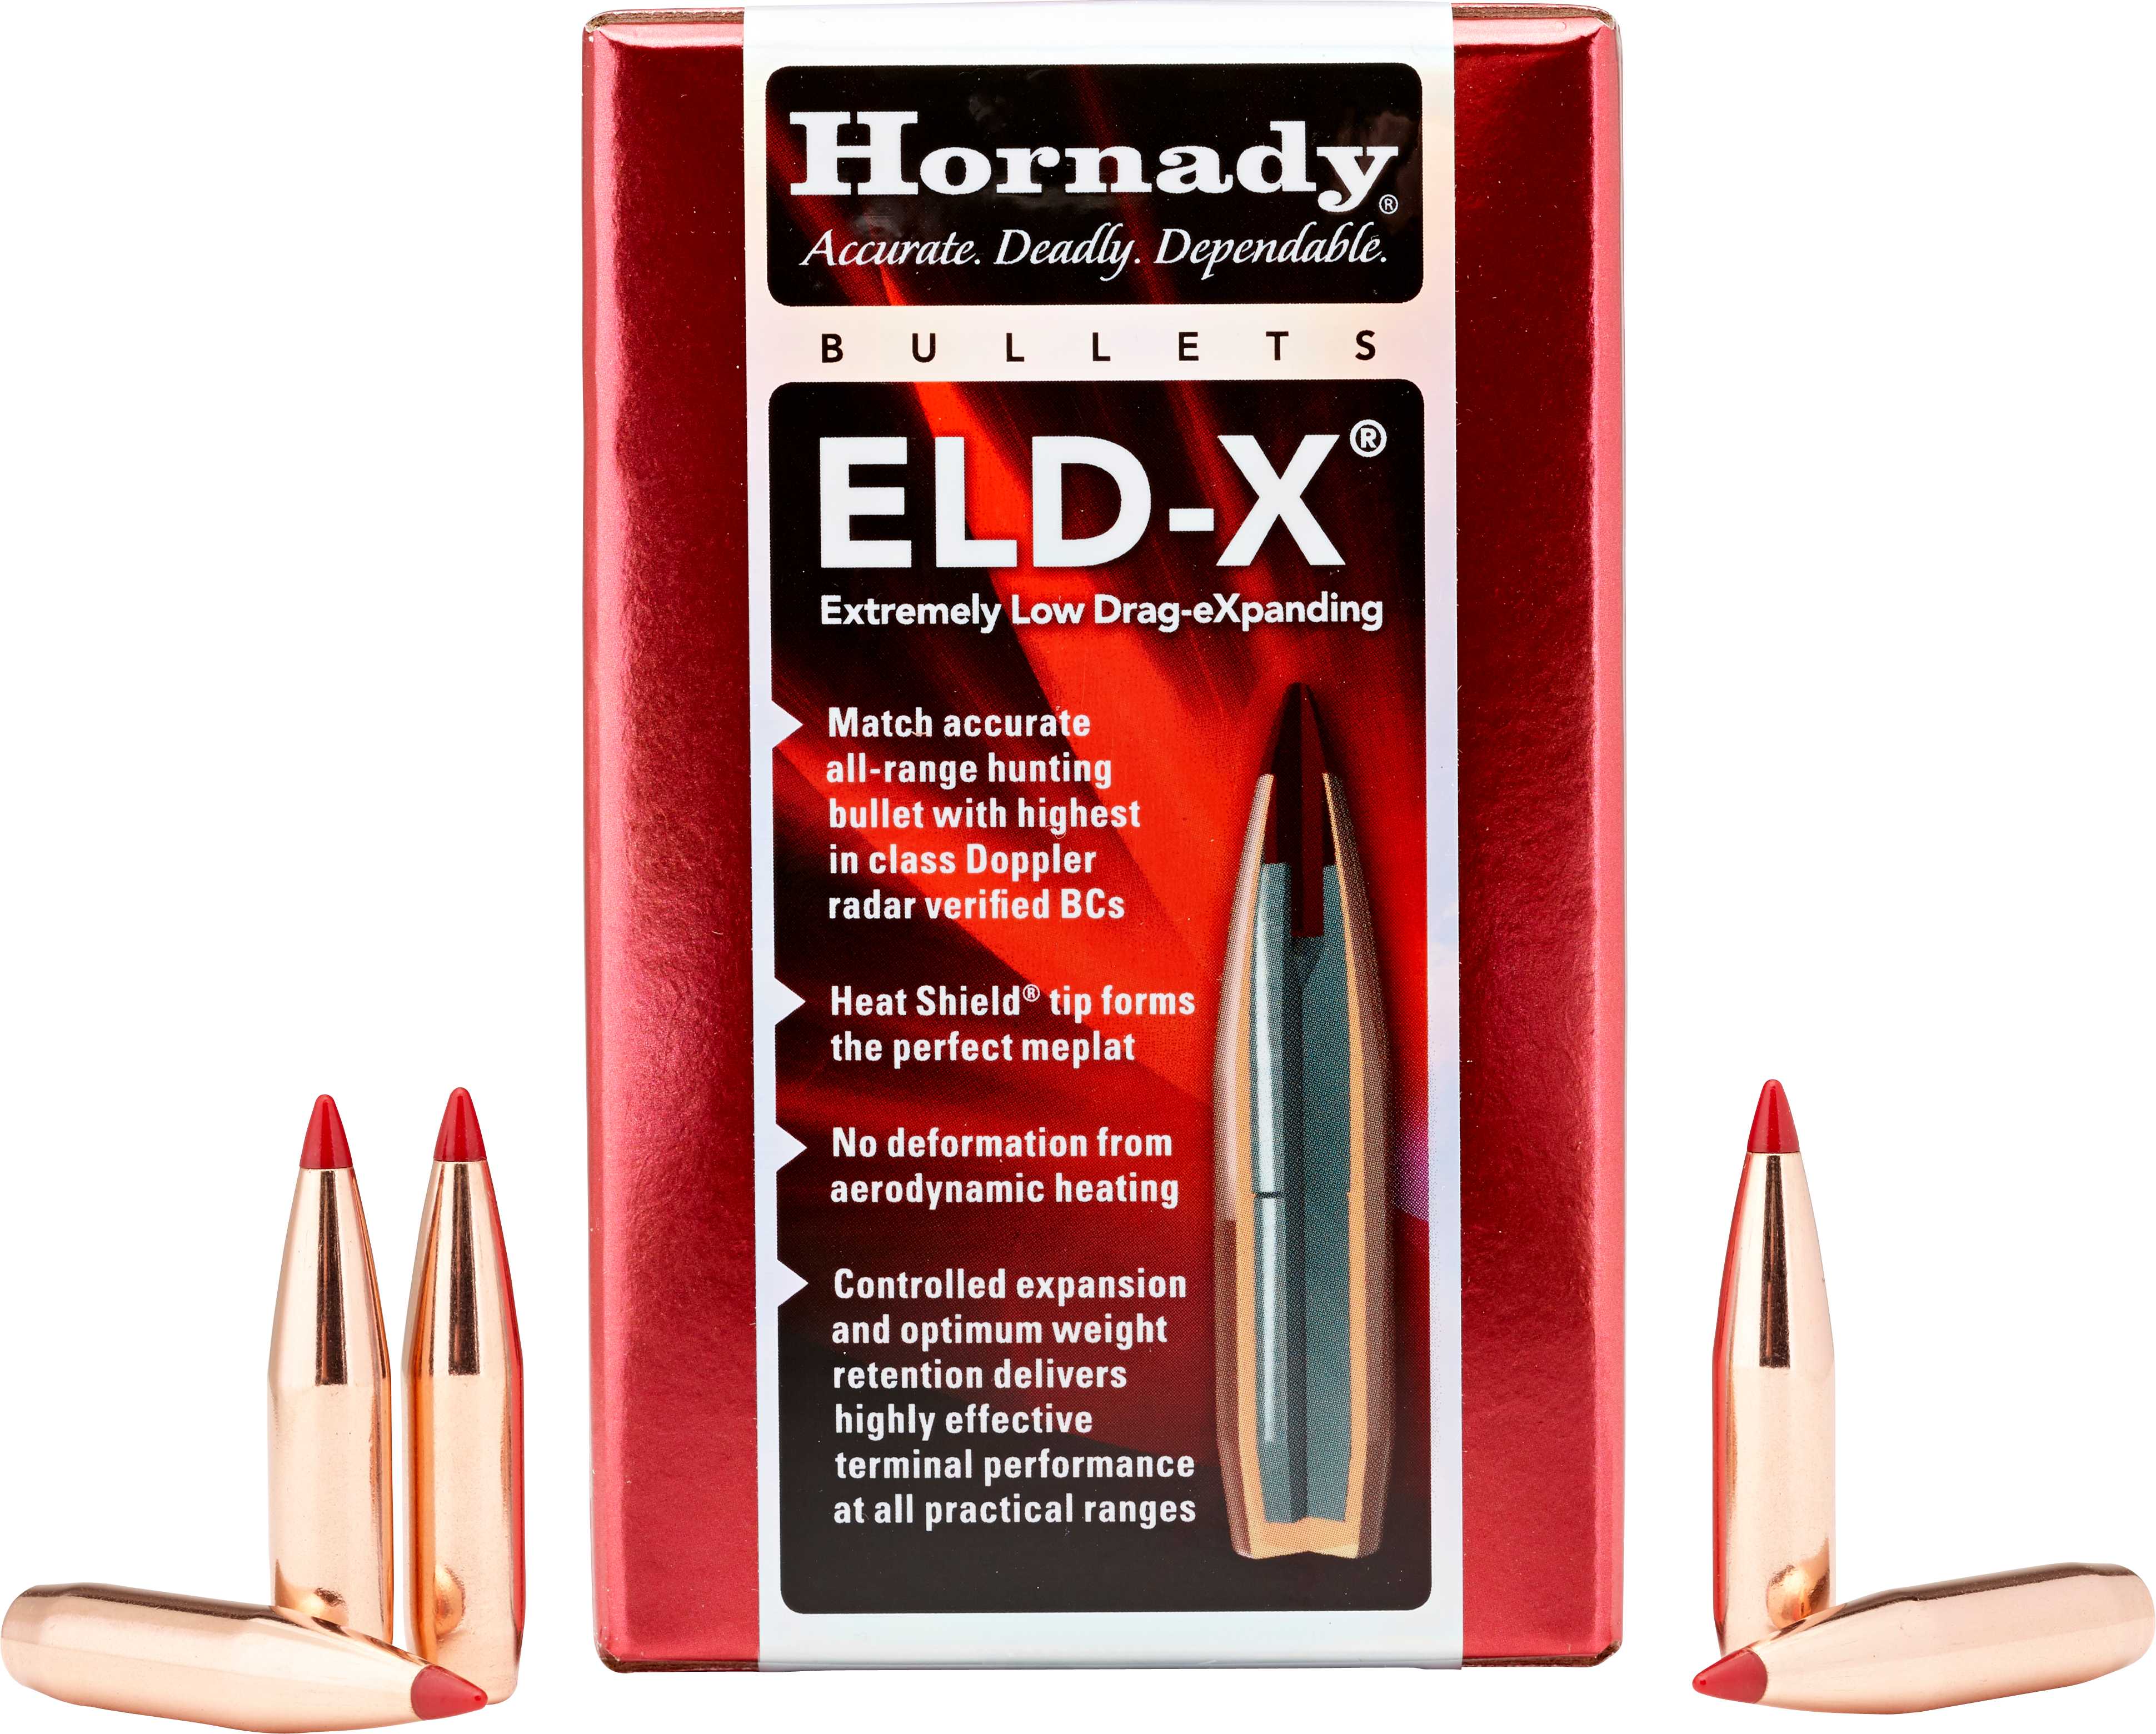 Hornady 7mm Bullets 175 Grains, Boat Tail, ELD-X, Per 100 Md: 2841